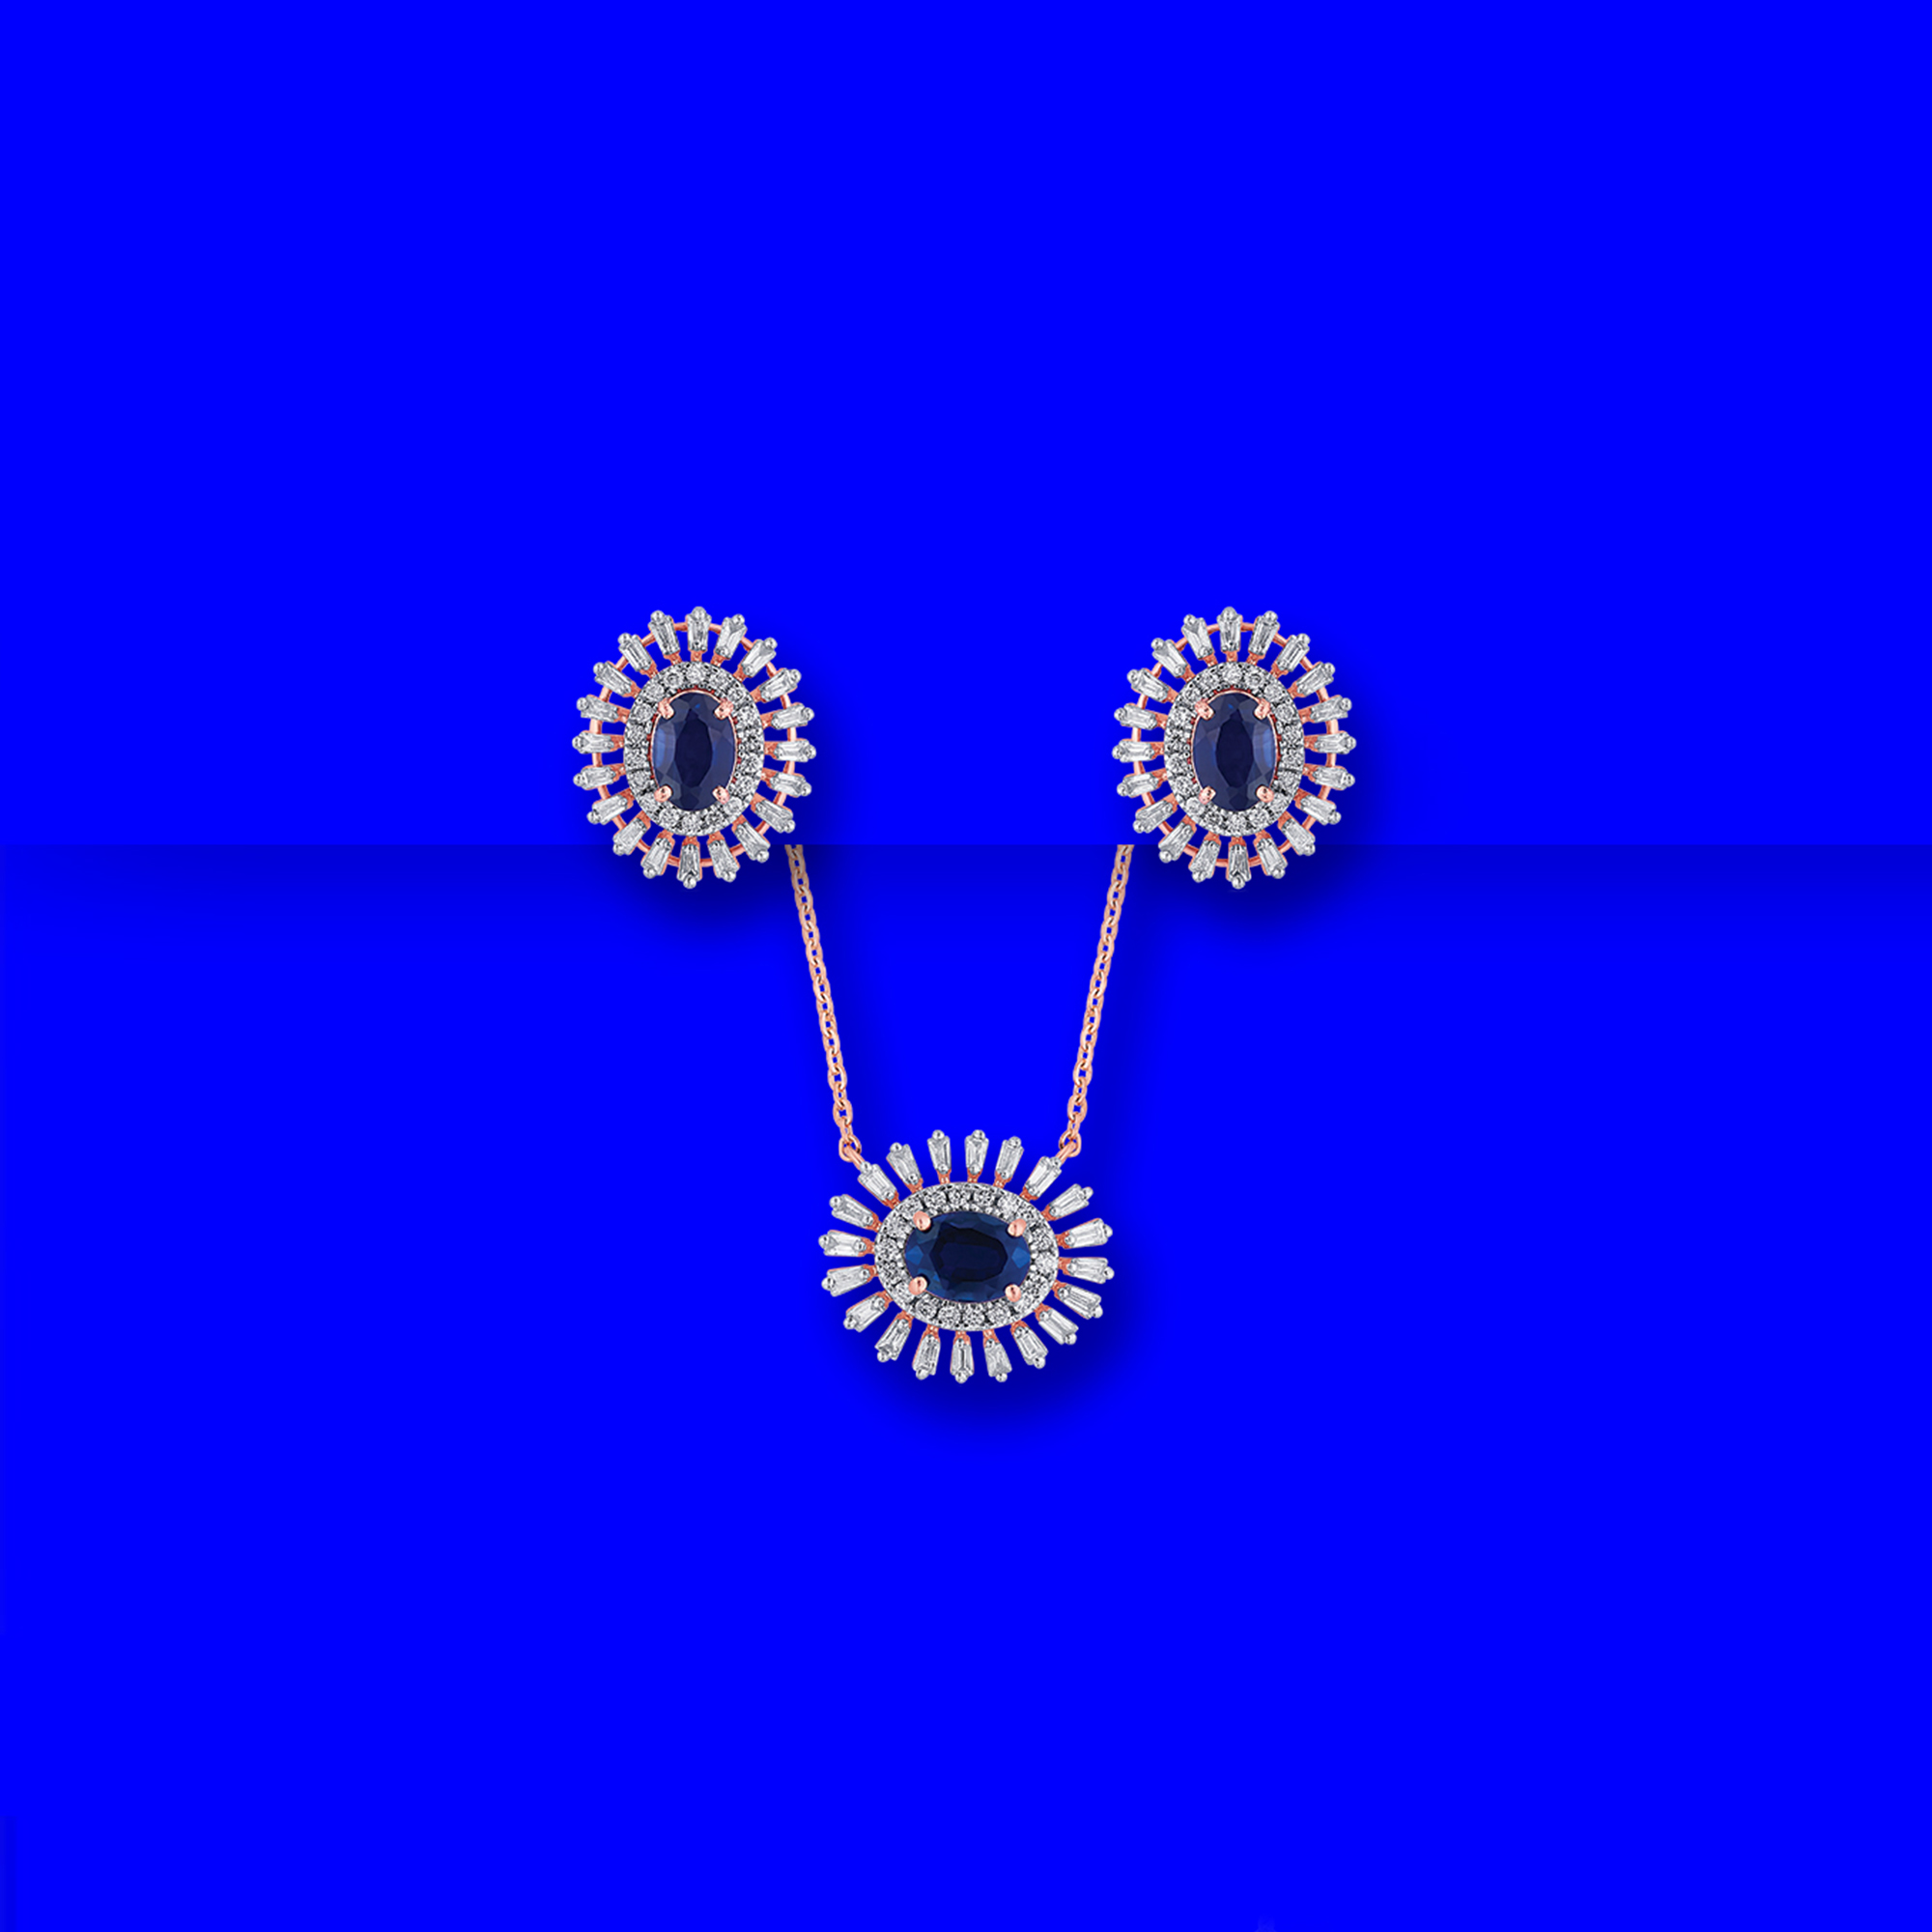 18K RG Diamond Pendant Earring Set with Chain